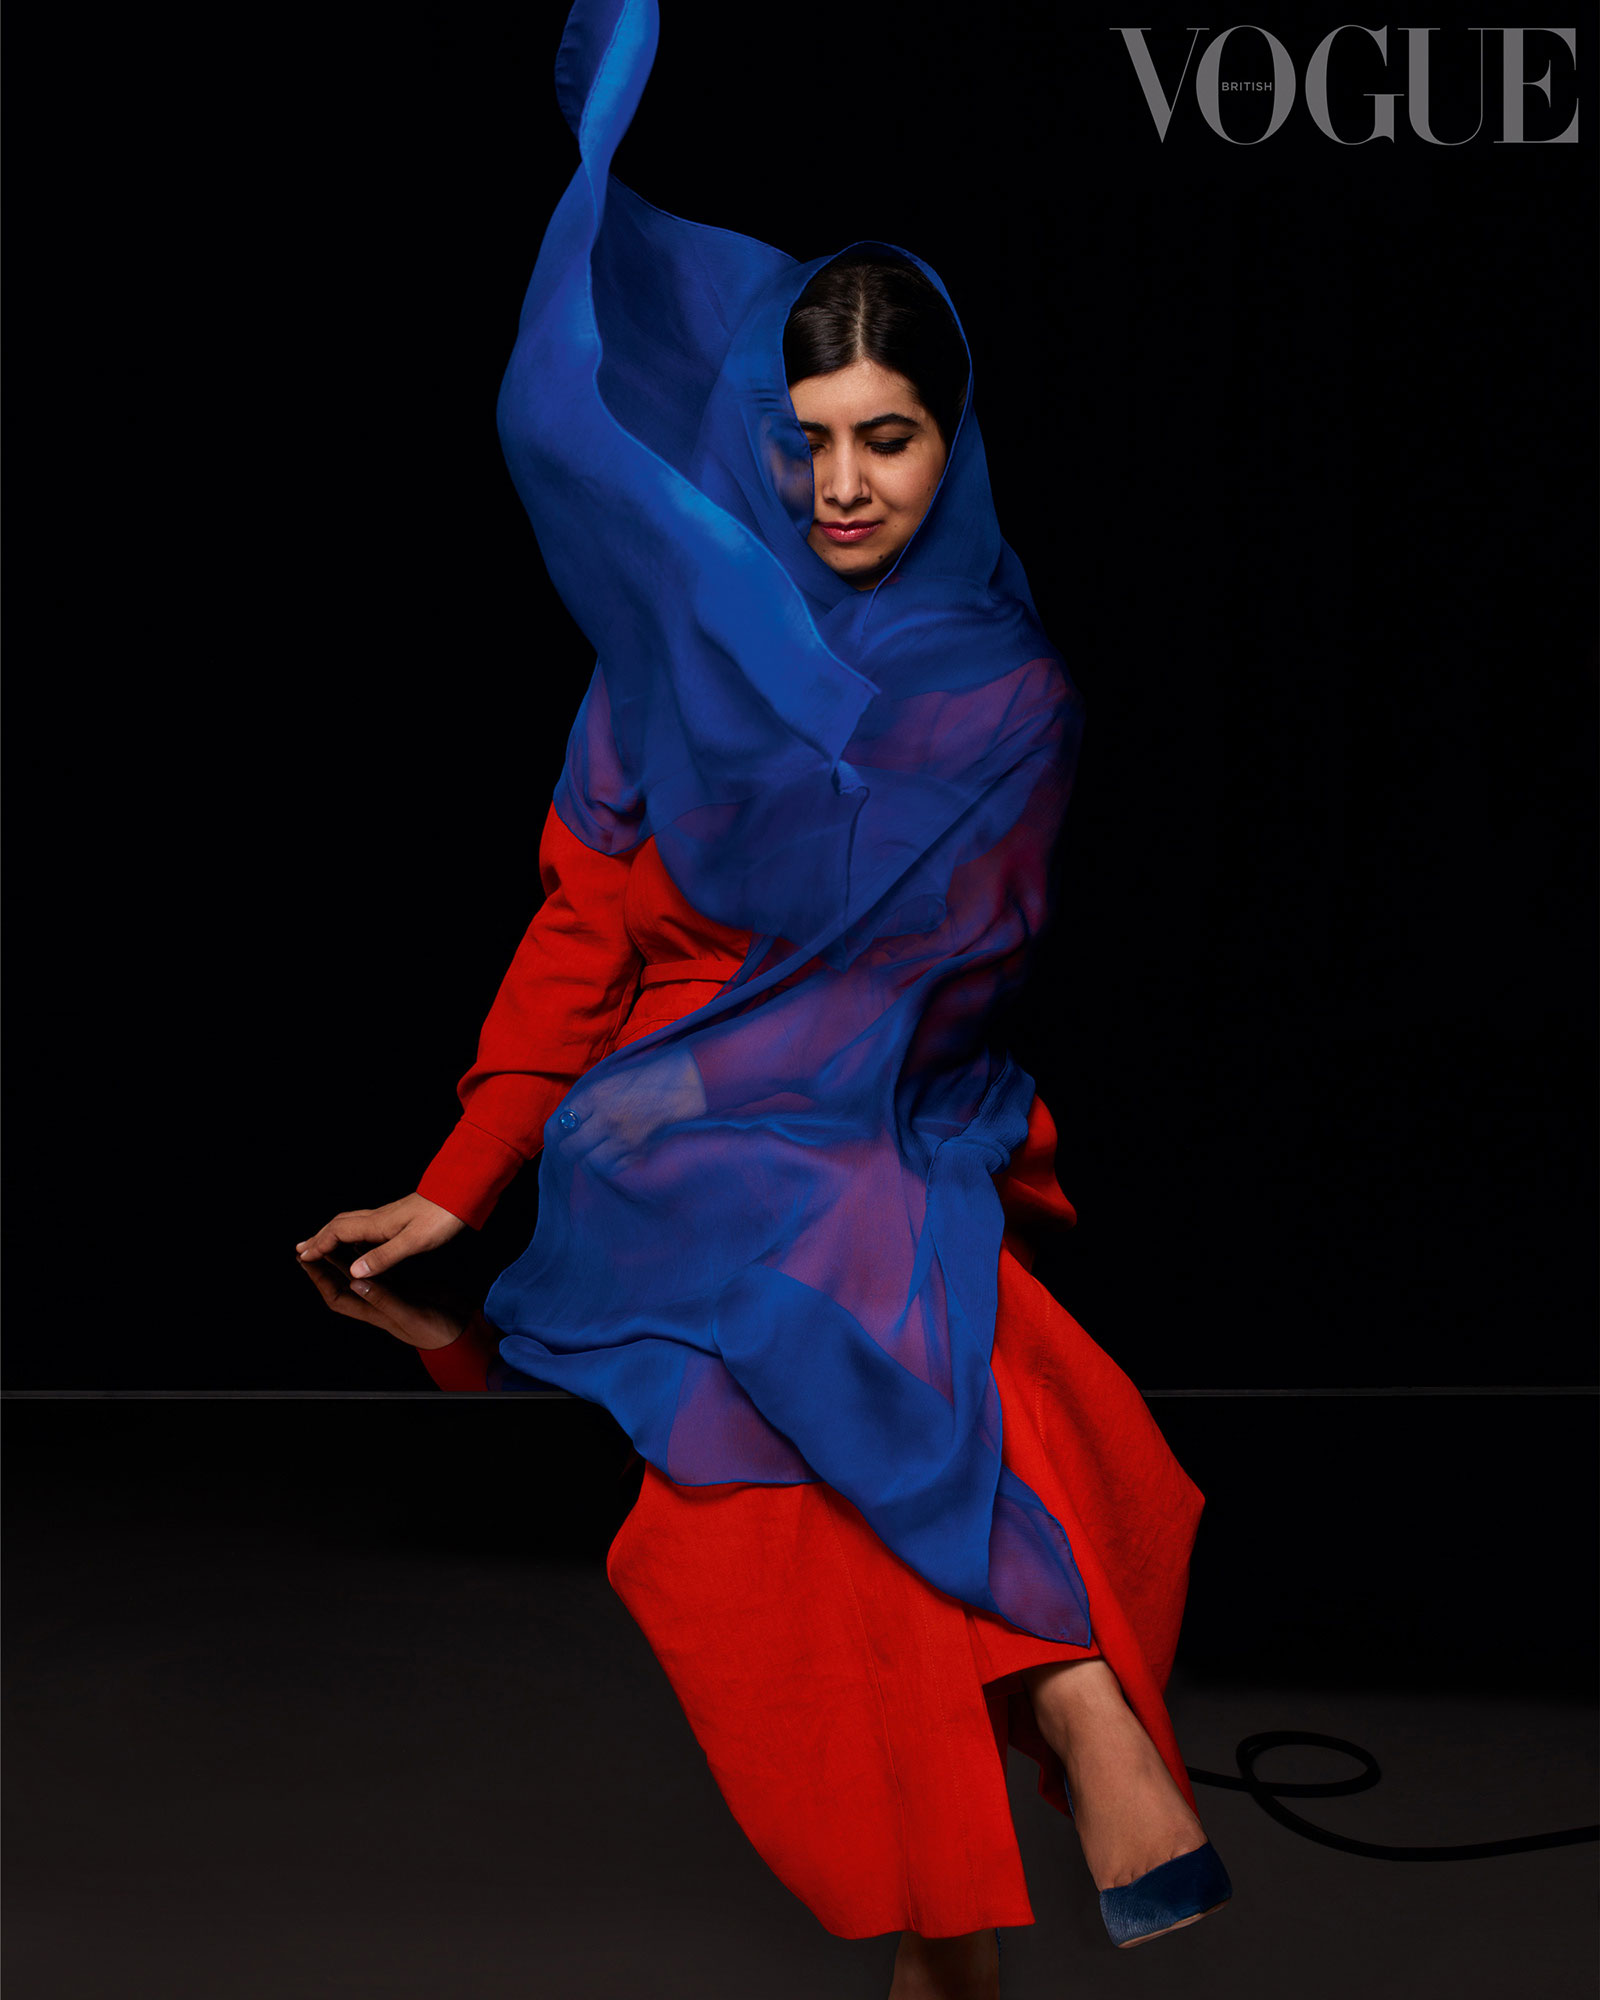 353159 177481 updates Malala Yousafzai makes British Vogue cover to ‘change the world’